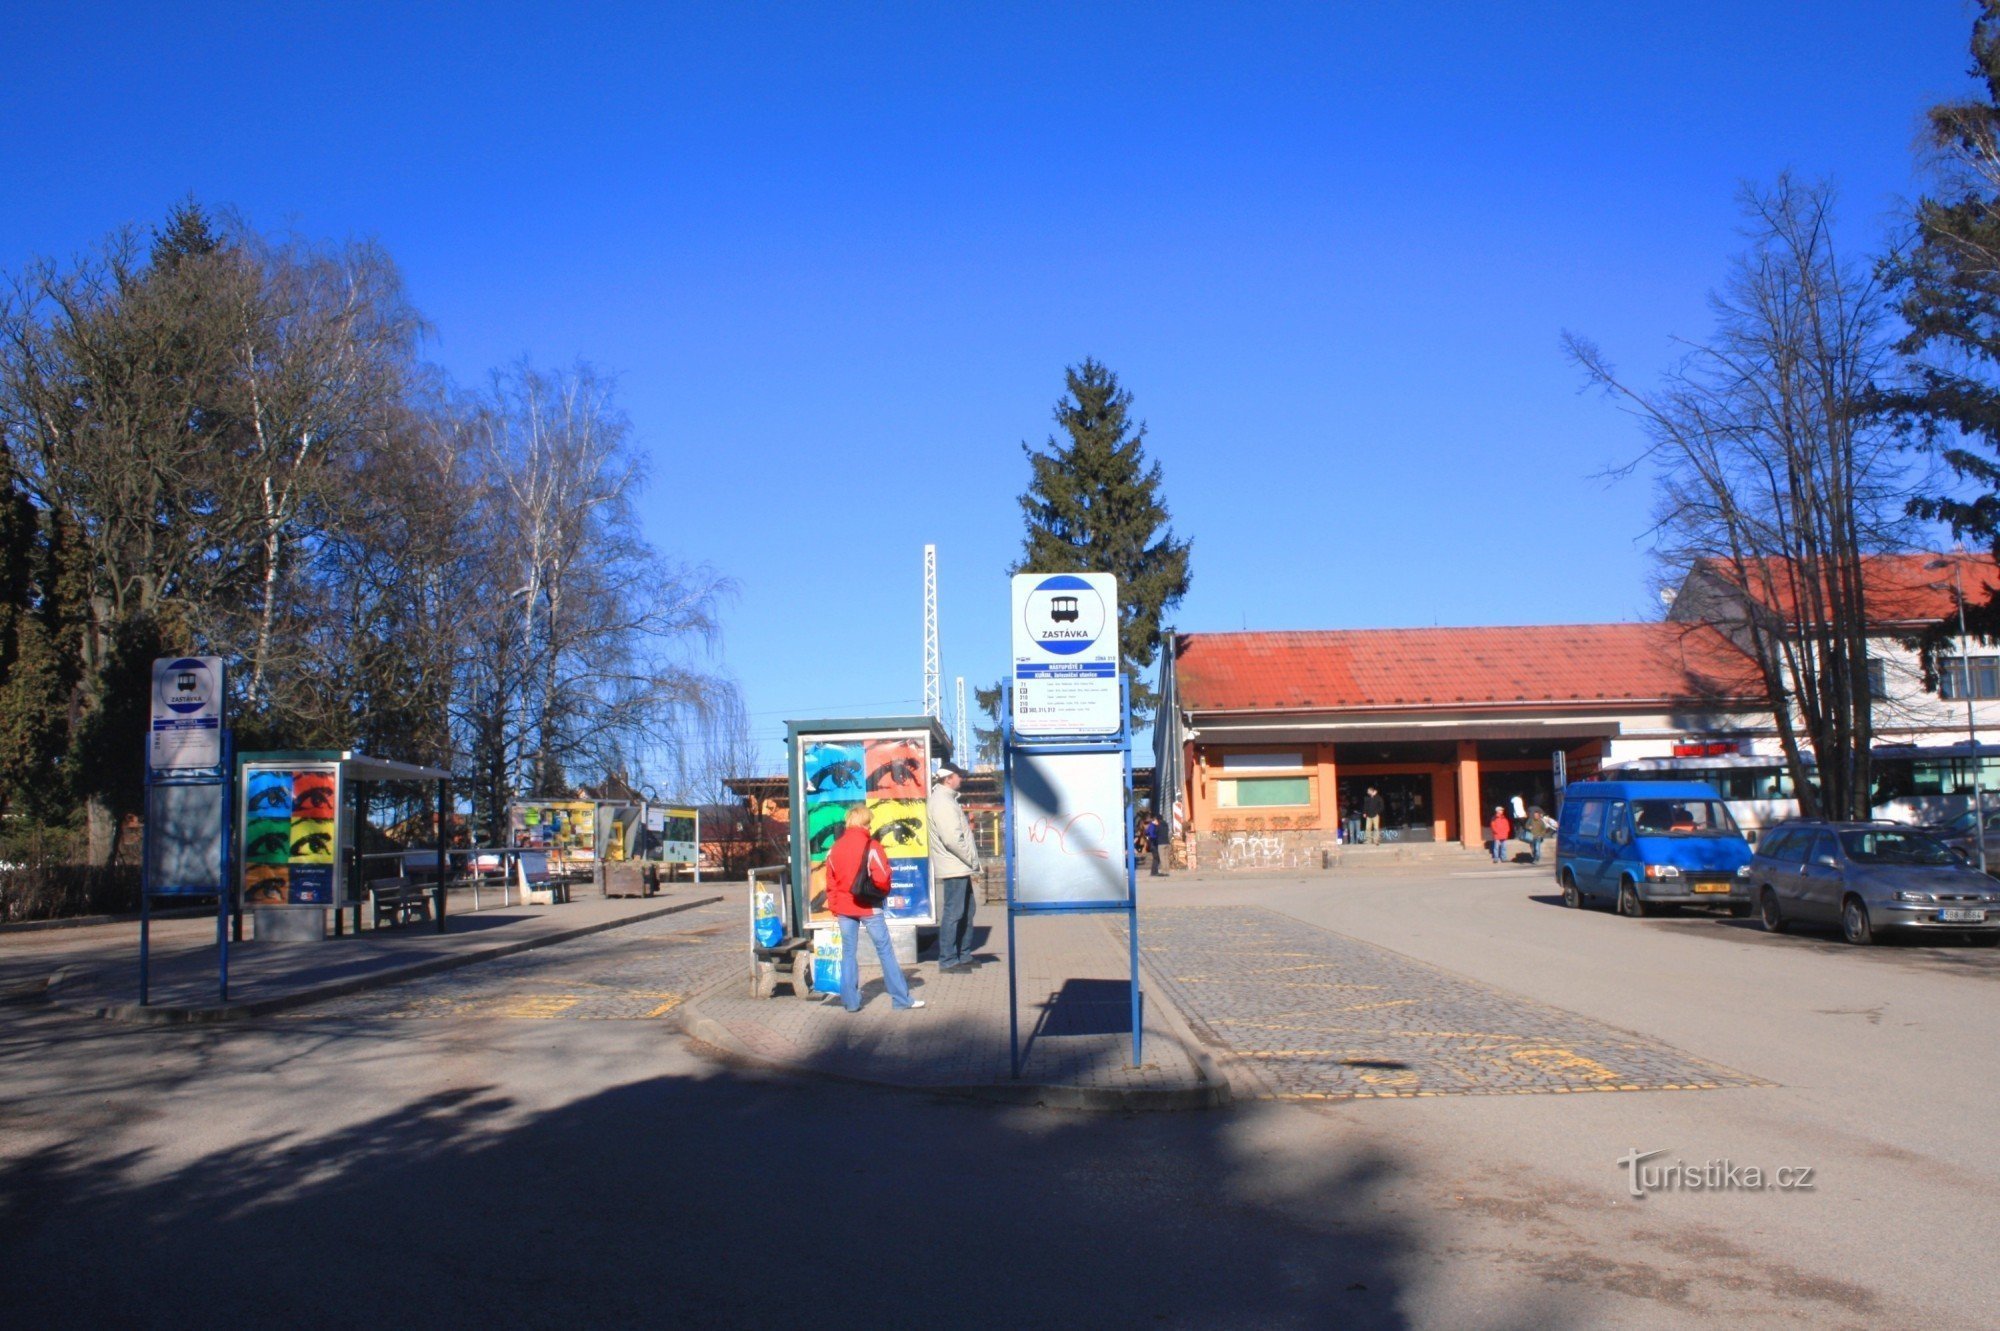 Kuřim - train and bus station